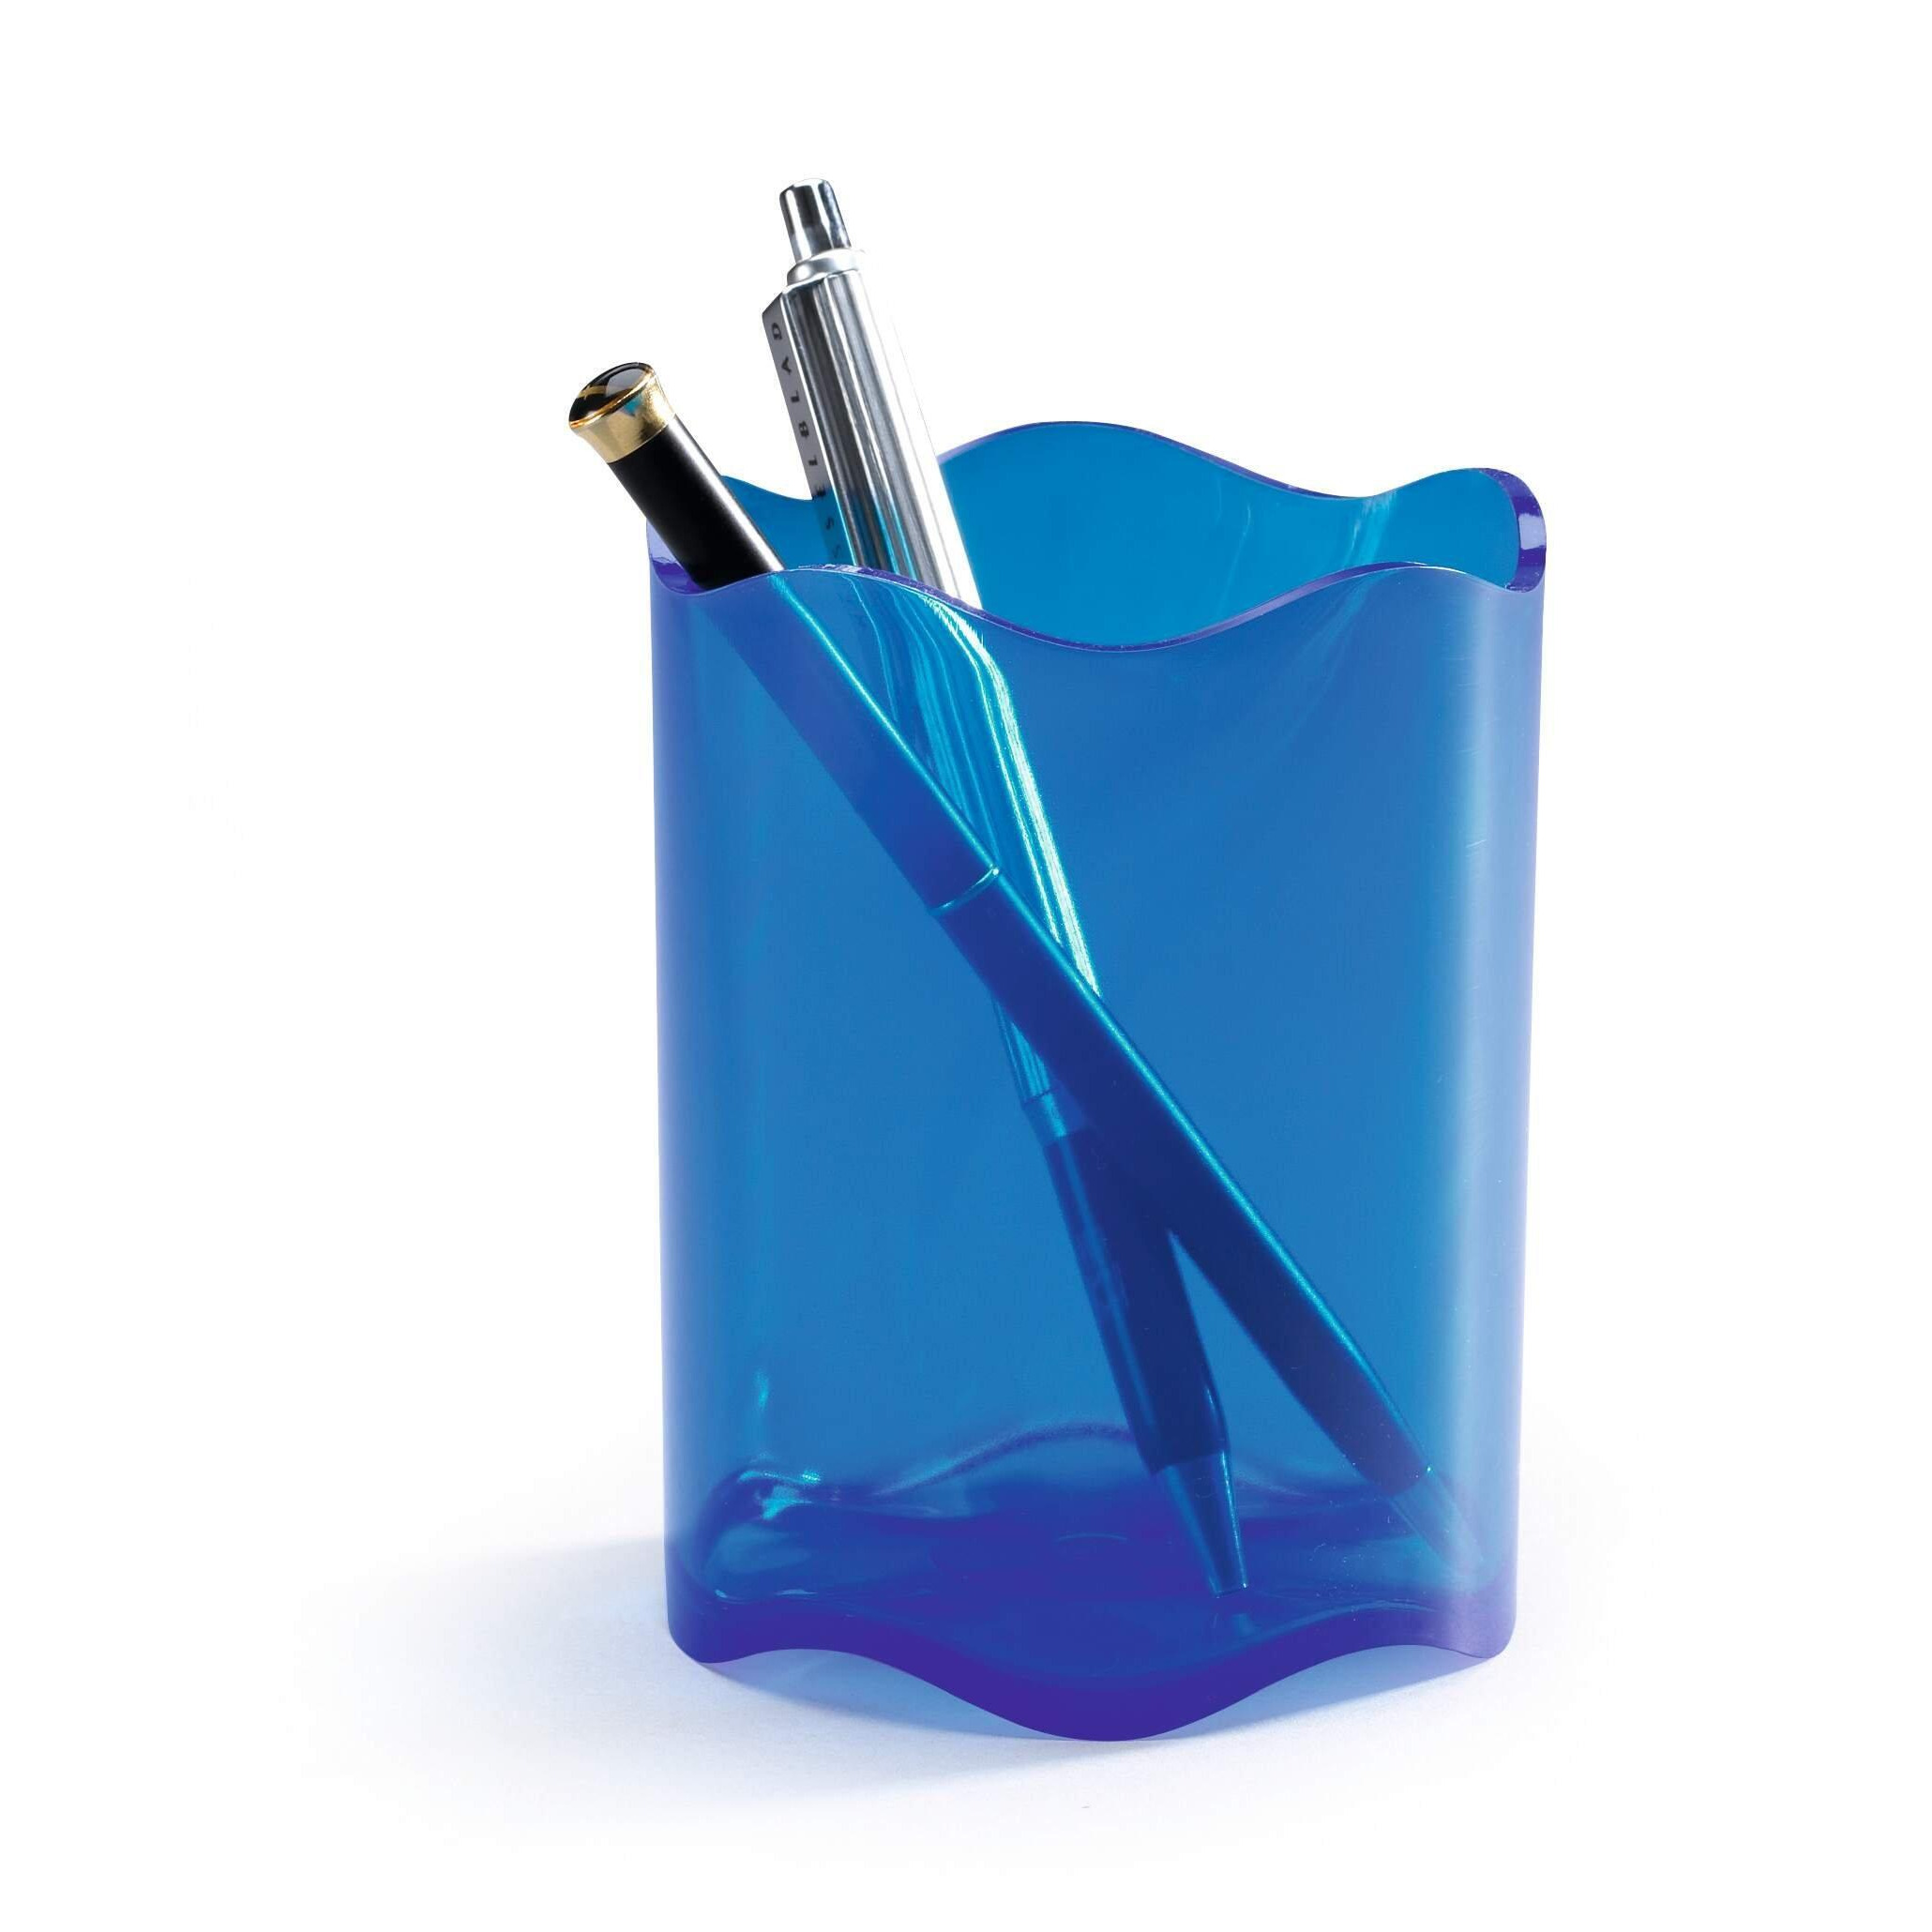 TREND Pen Pot Pencil Holder Desk Tidy Organizer Cup - Blue - image 1